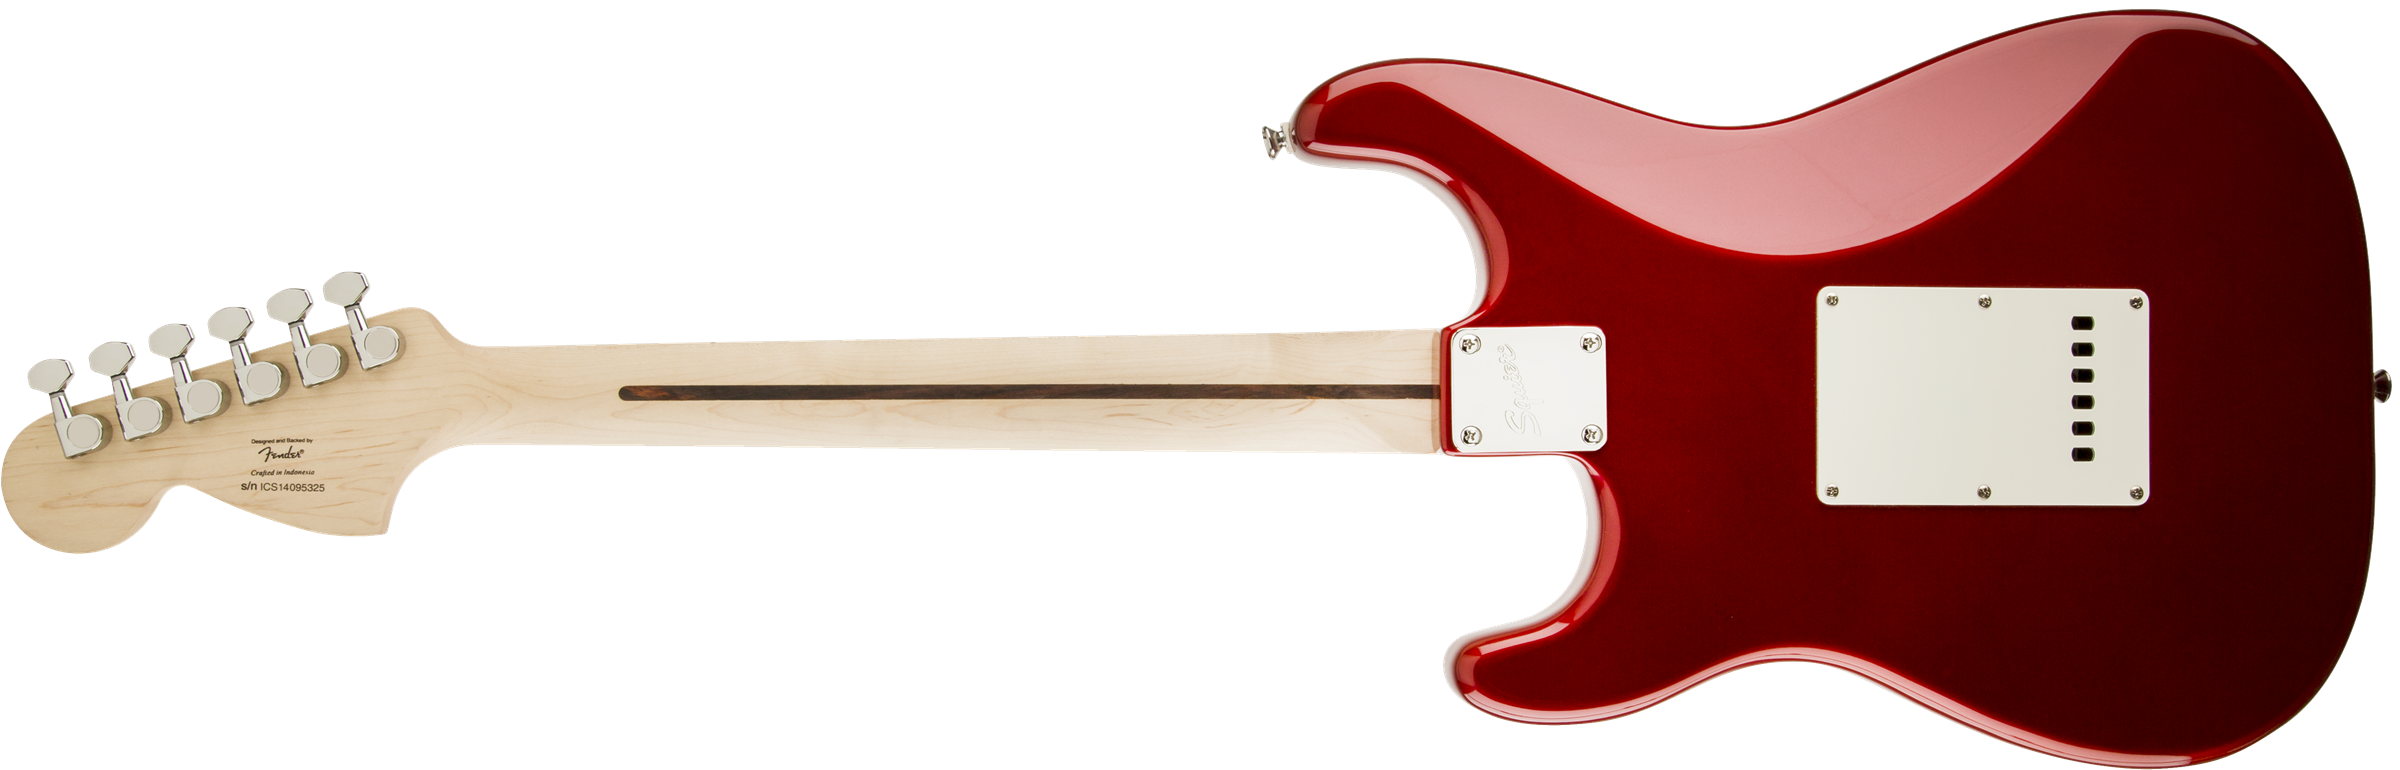 Squier Strat Standard Mn - Candy Apple Red - Guitare Électrique Forme Str - Variation 1